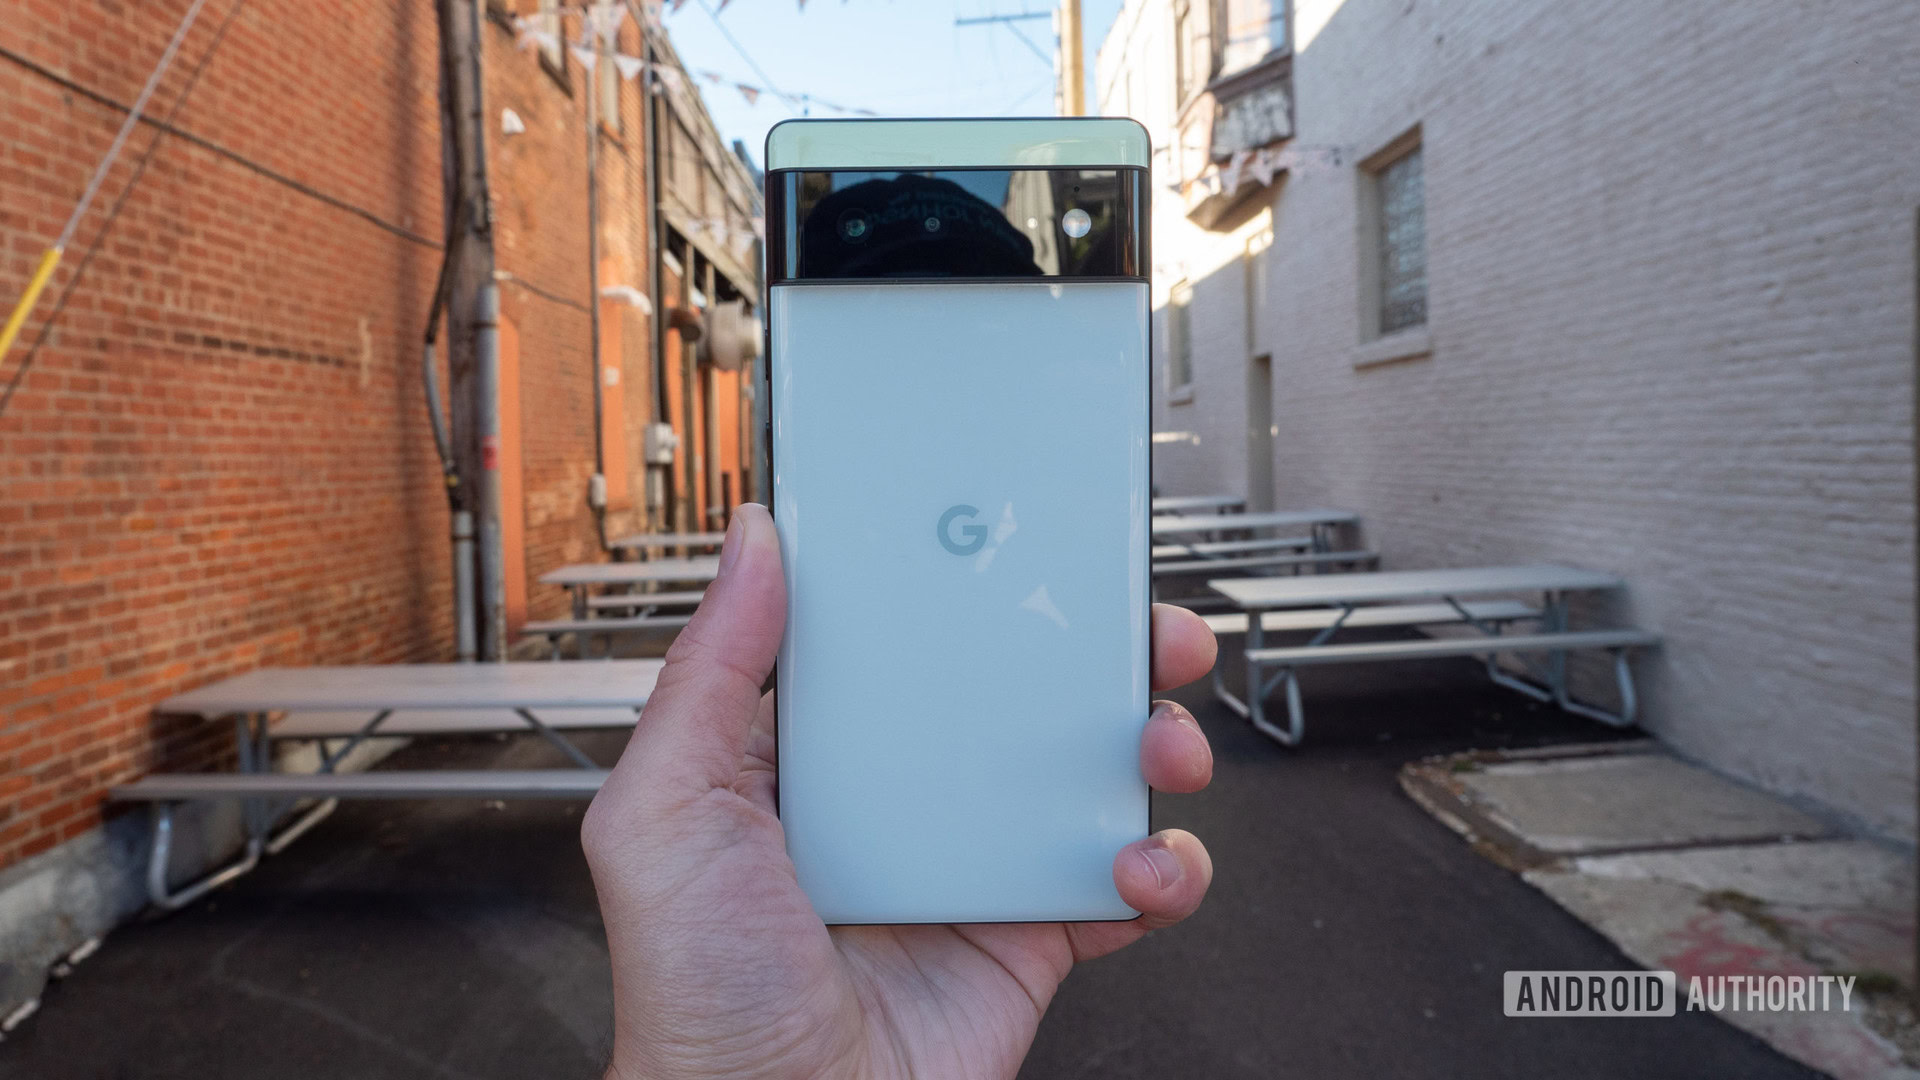 The Google Pixel 6 in Sorta Seafoam color in hand